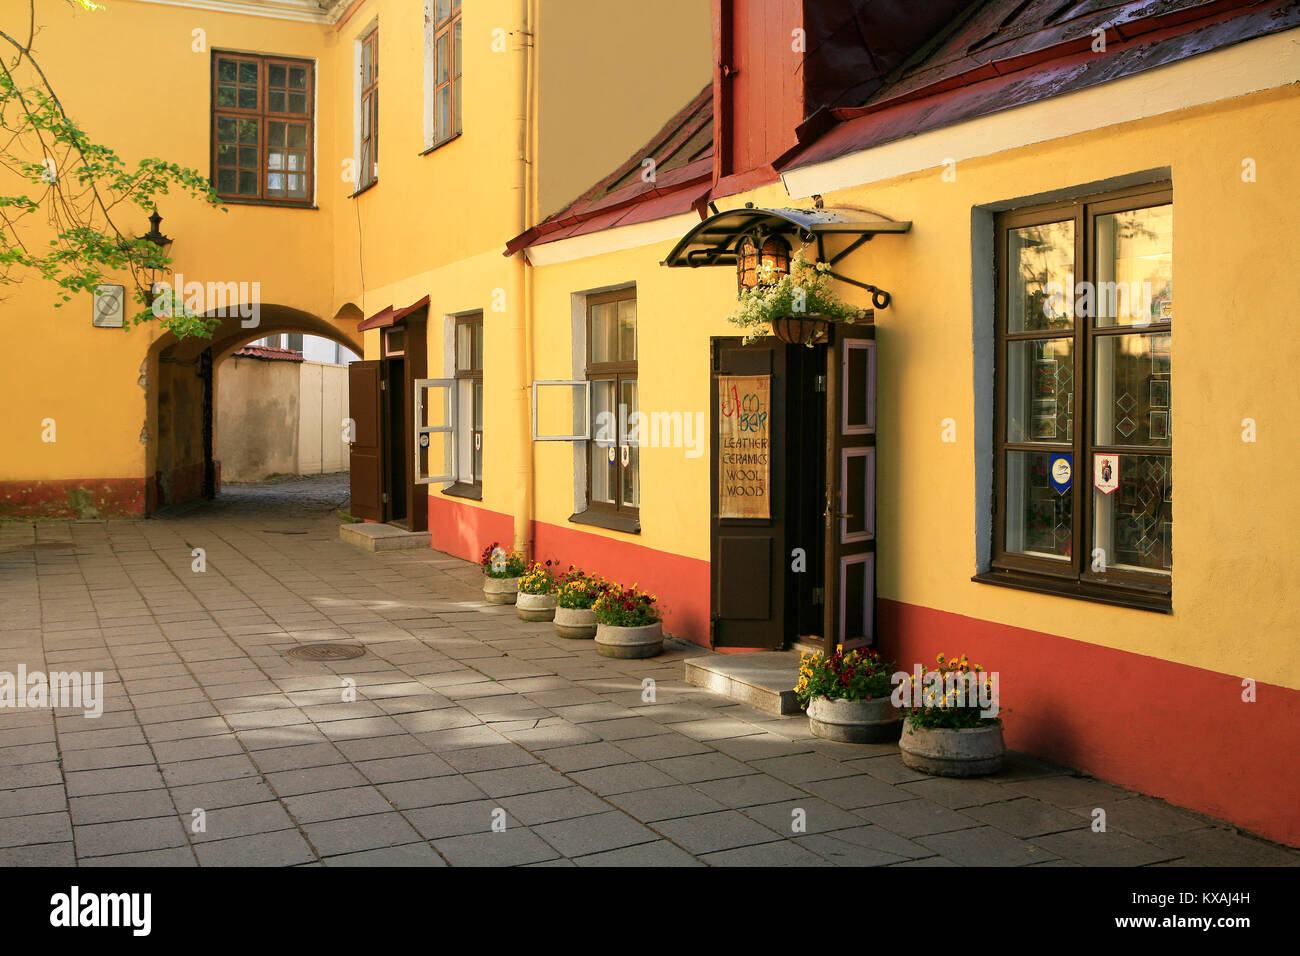 Souvenir shop in the Old Town of Tallinn, Estonia Stock Photo